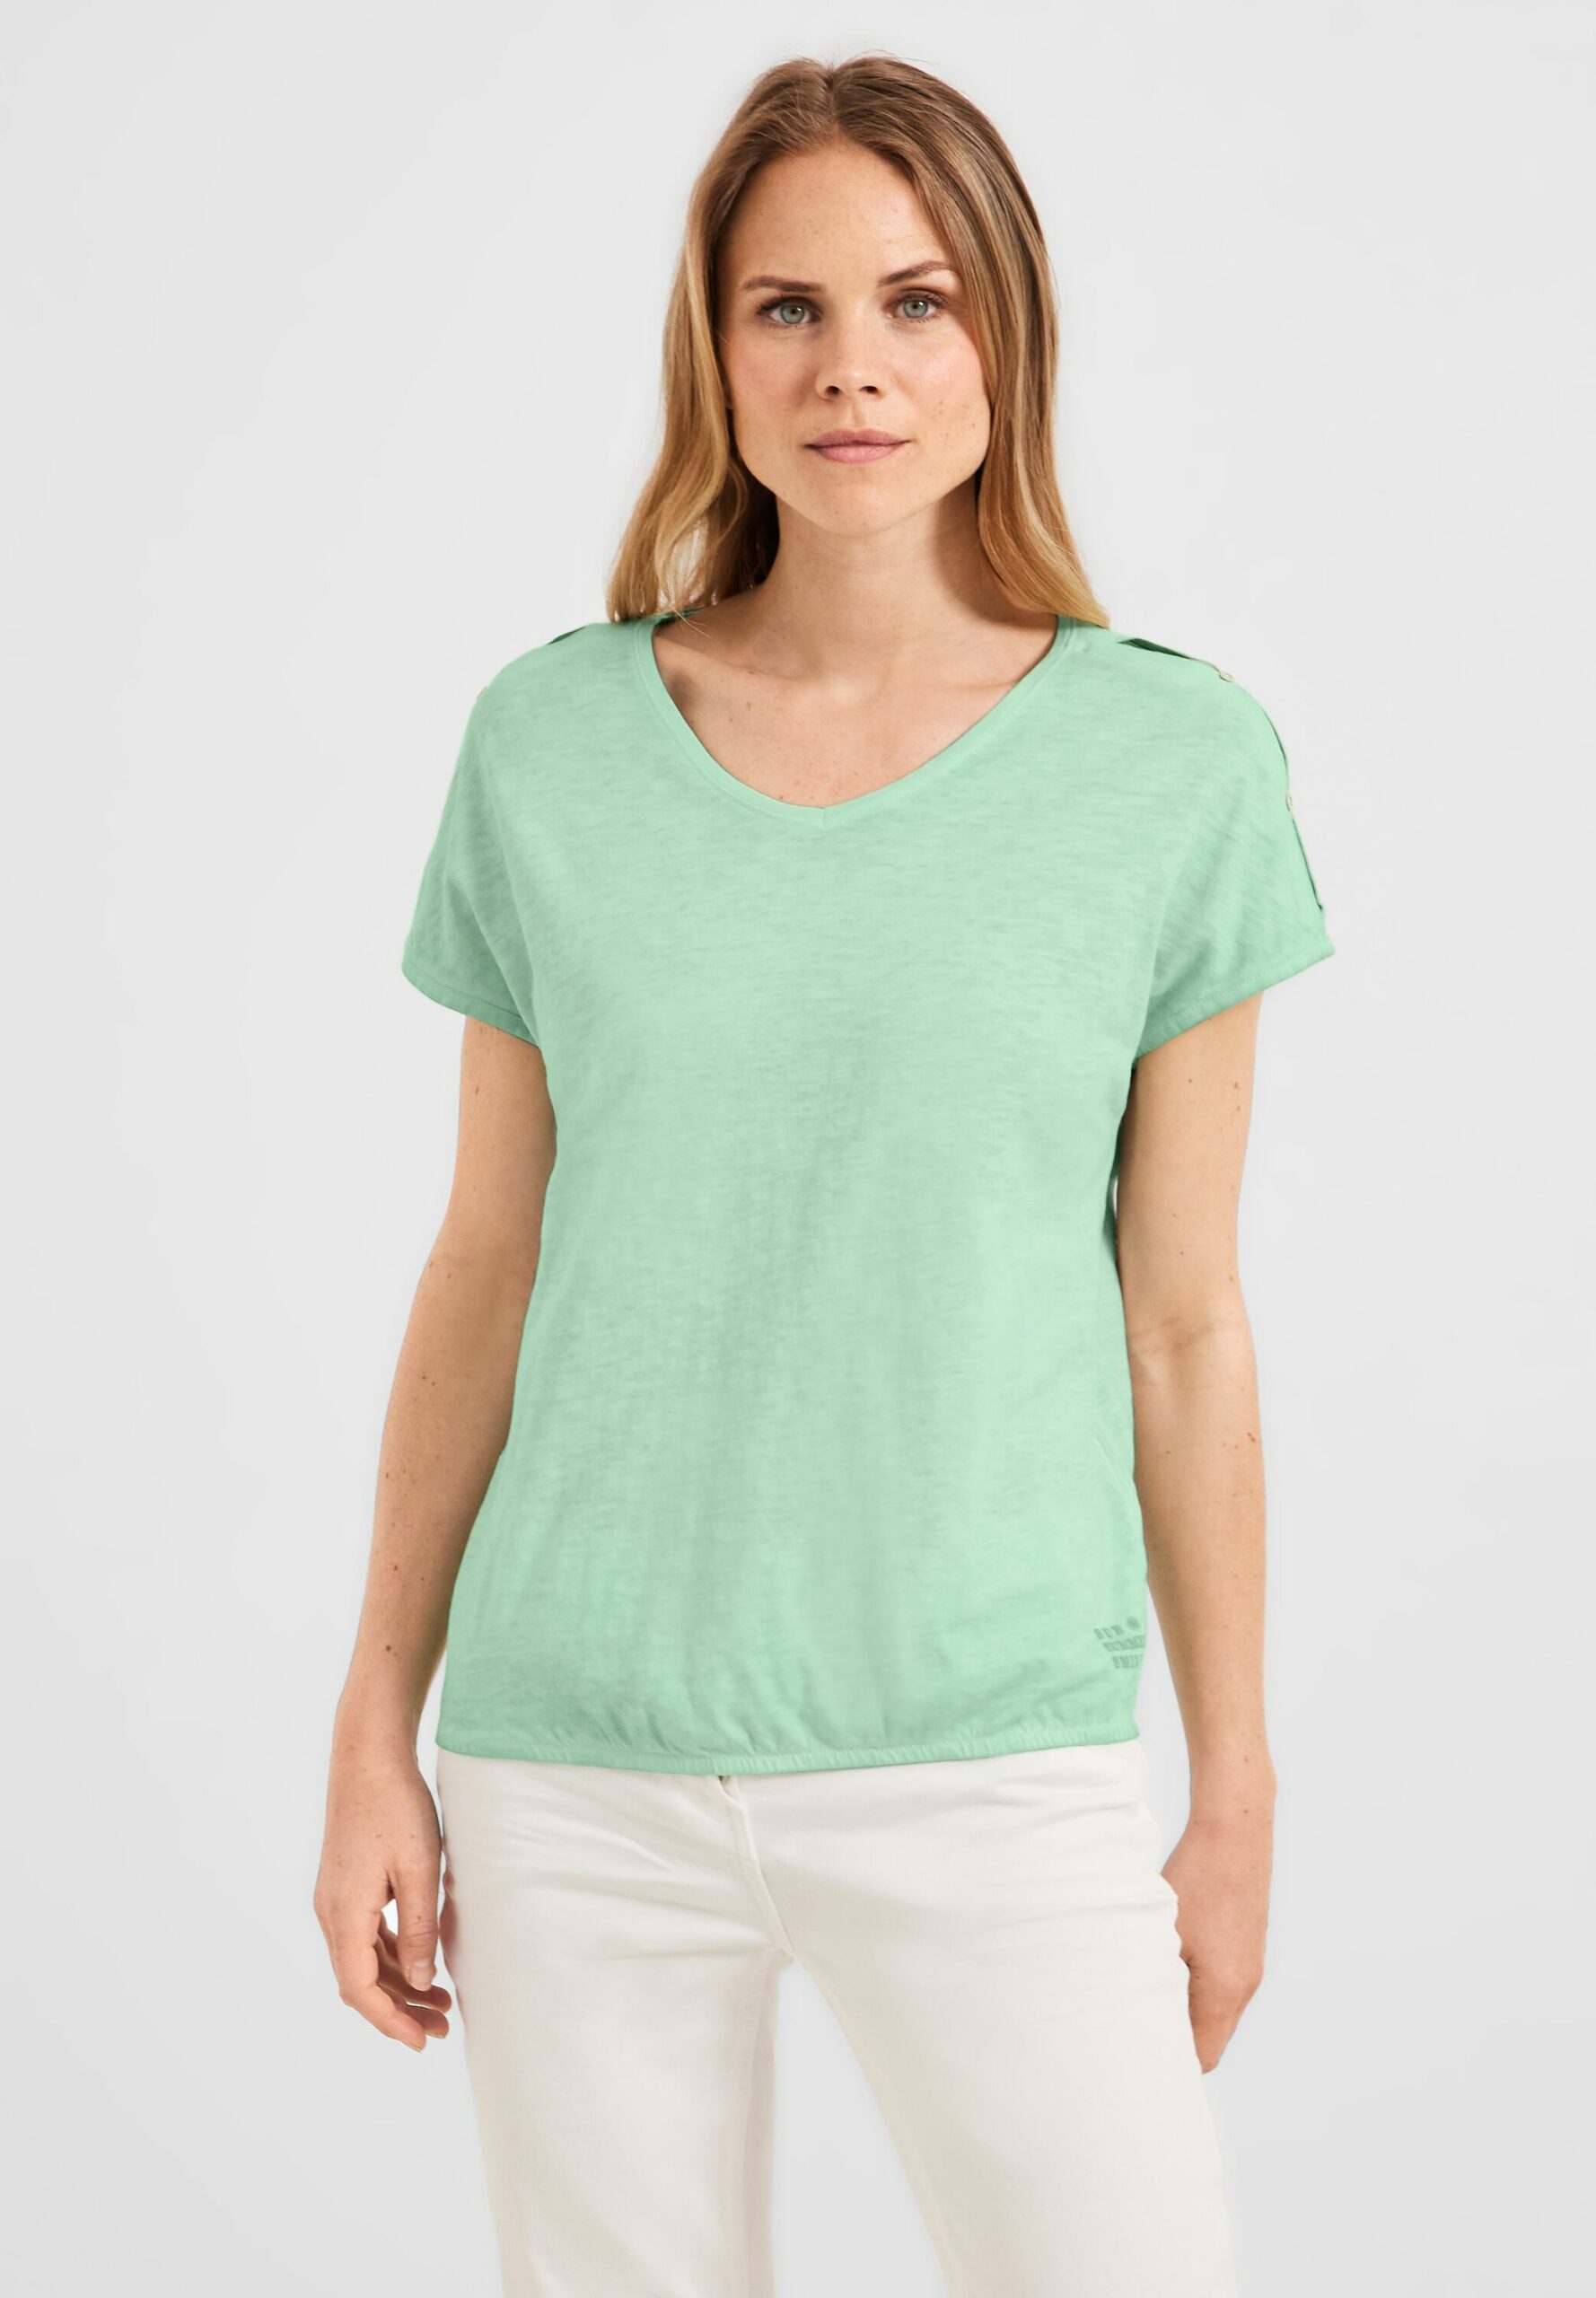 Kamlage Damen CECIL T-Shirt Webshop - Modehaus